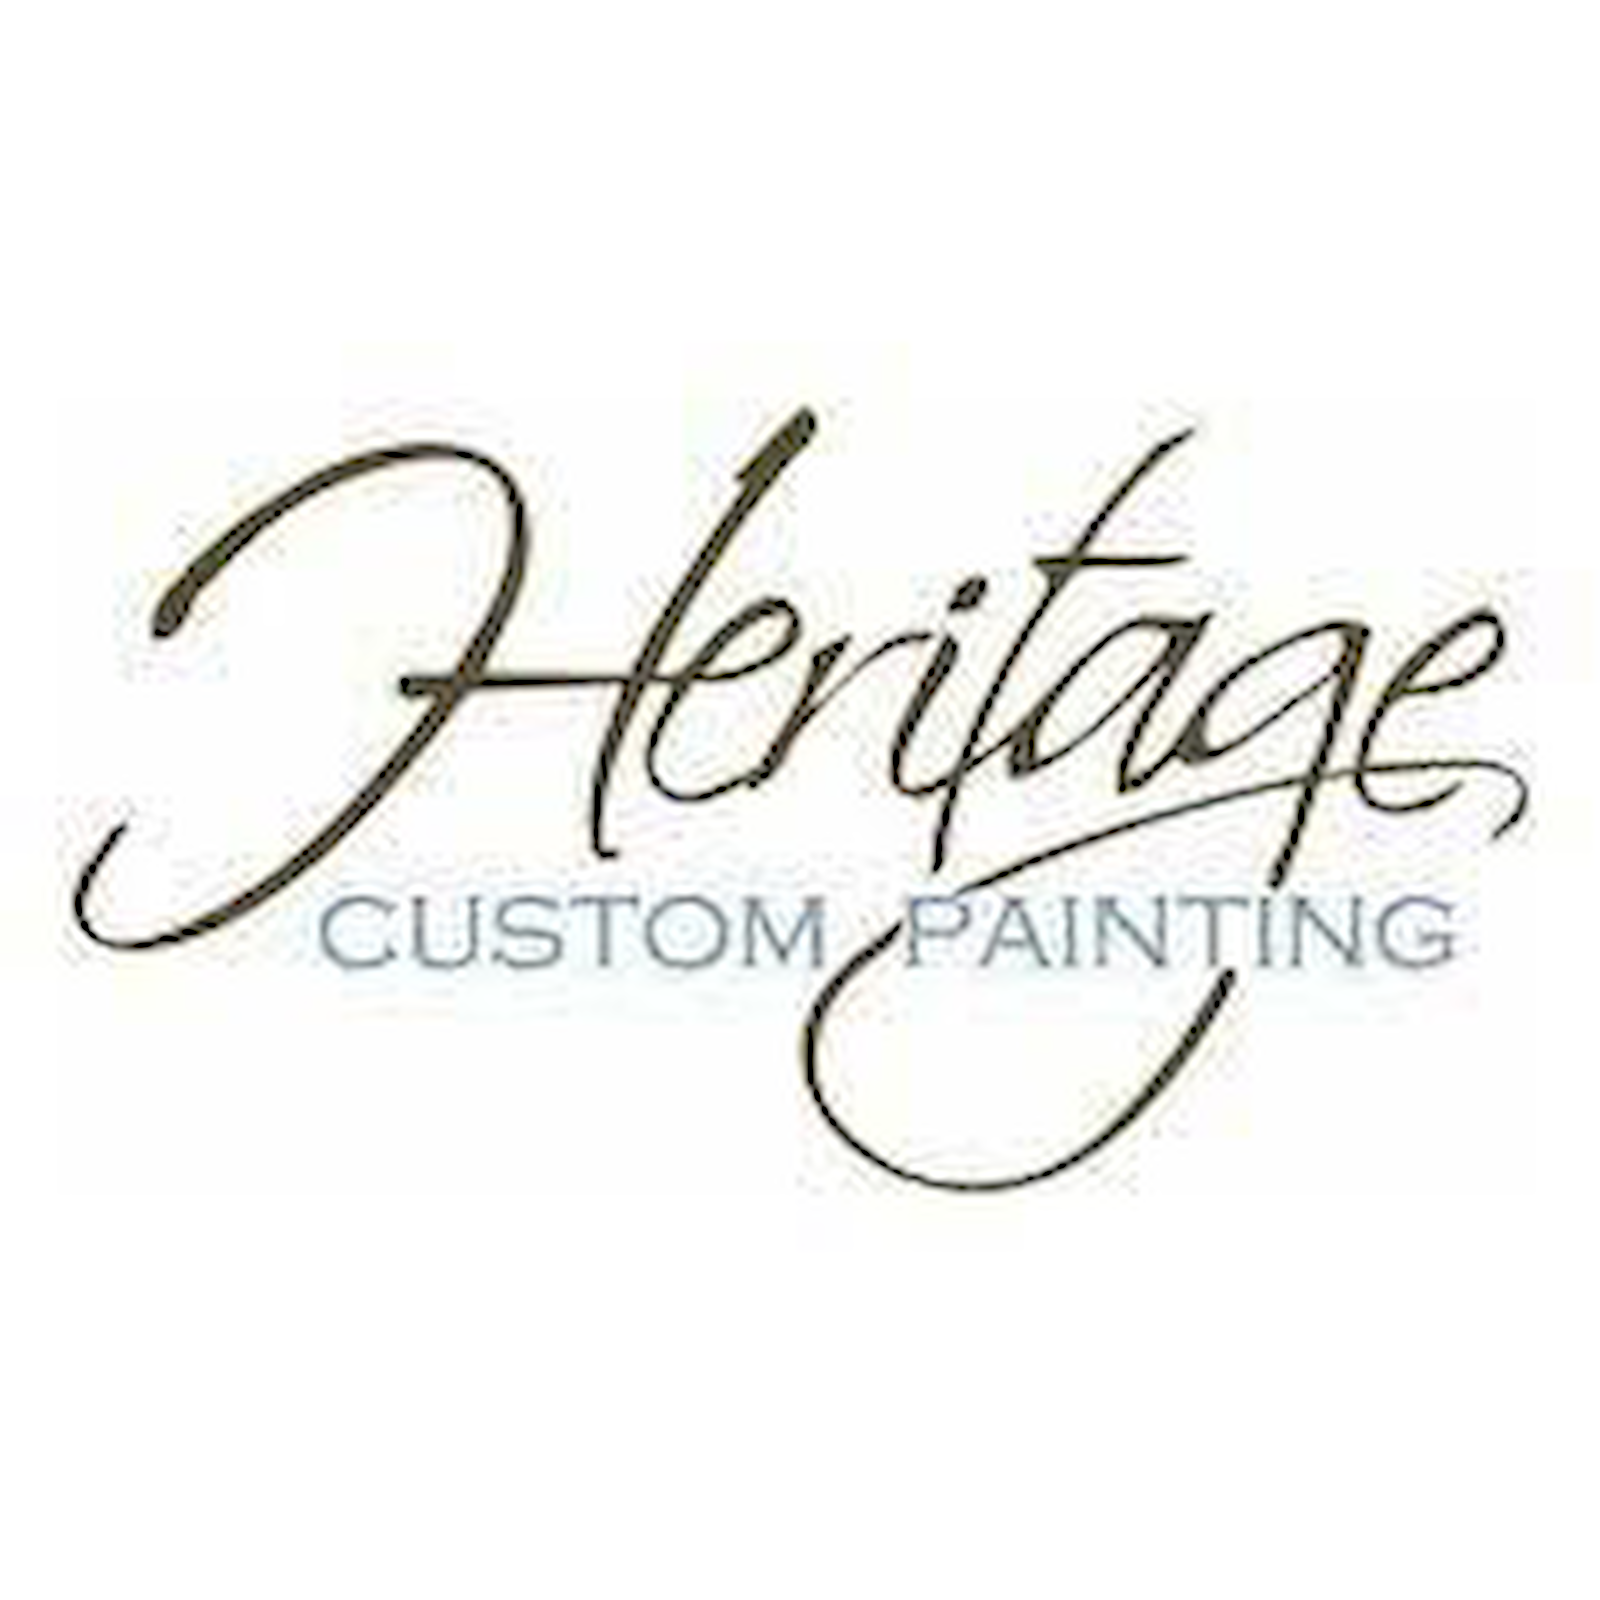 Heritage Custom Painting